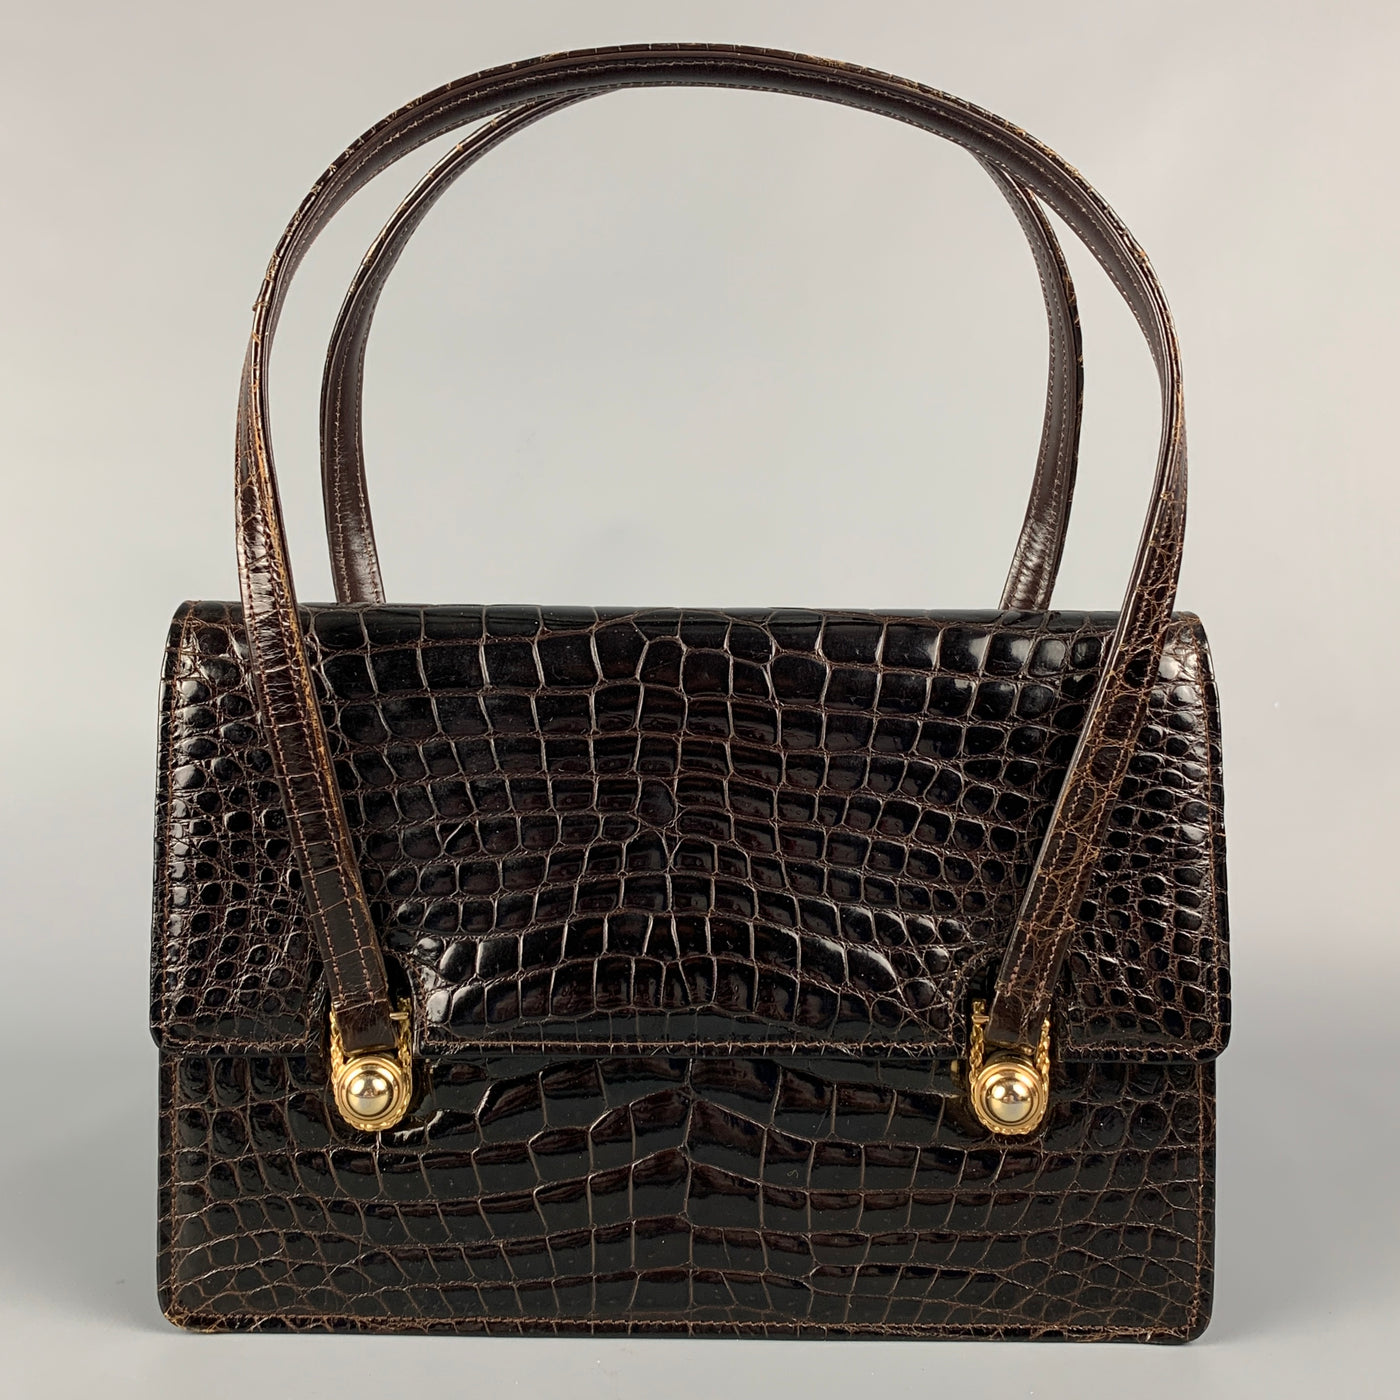 Women Retro Crocodile Pattern Leather Handbag Fashion Tote Handle Bag with  Zipper and Shoulder Strap - Everweek